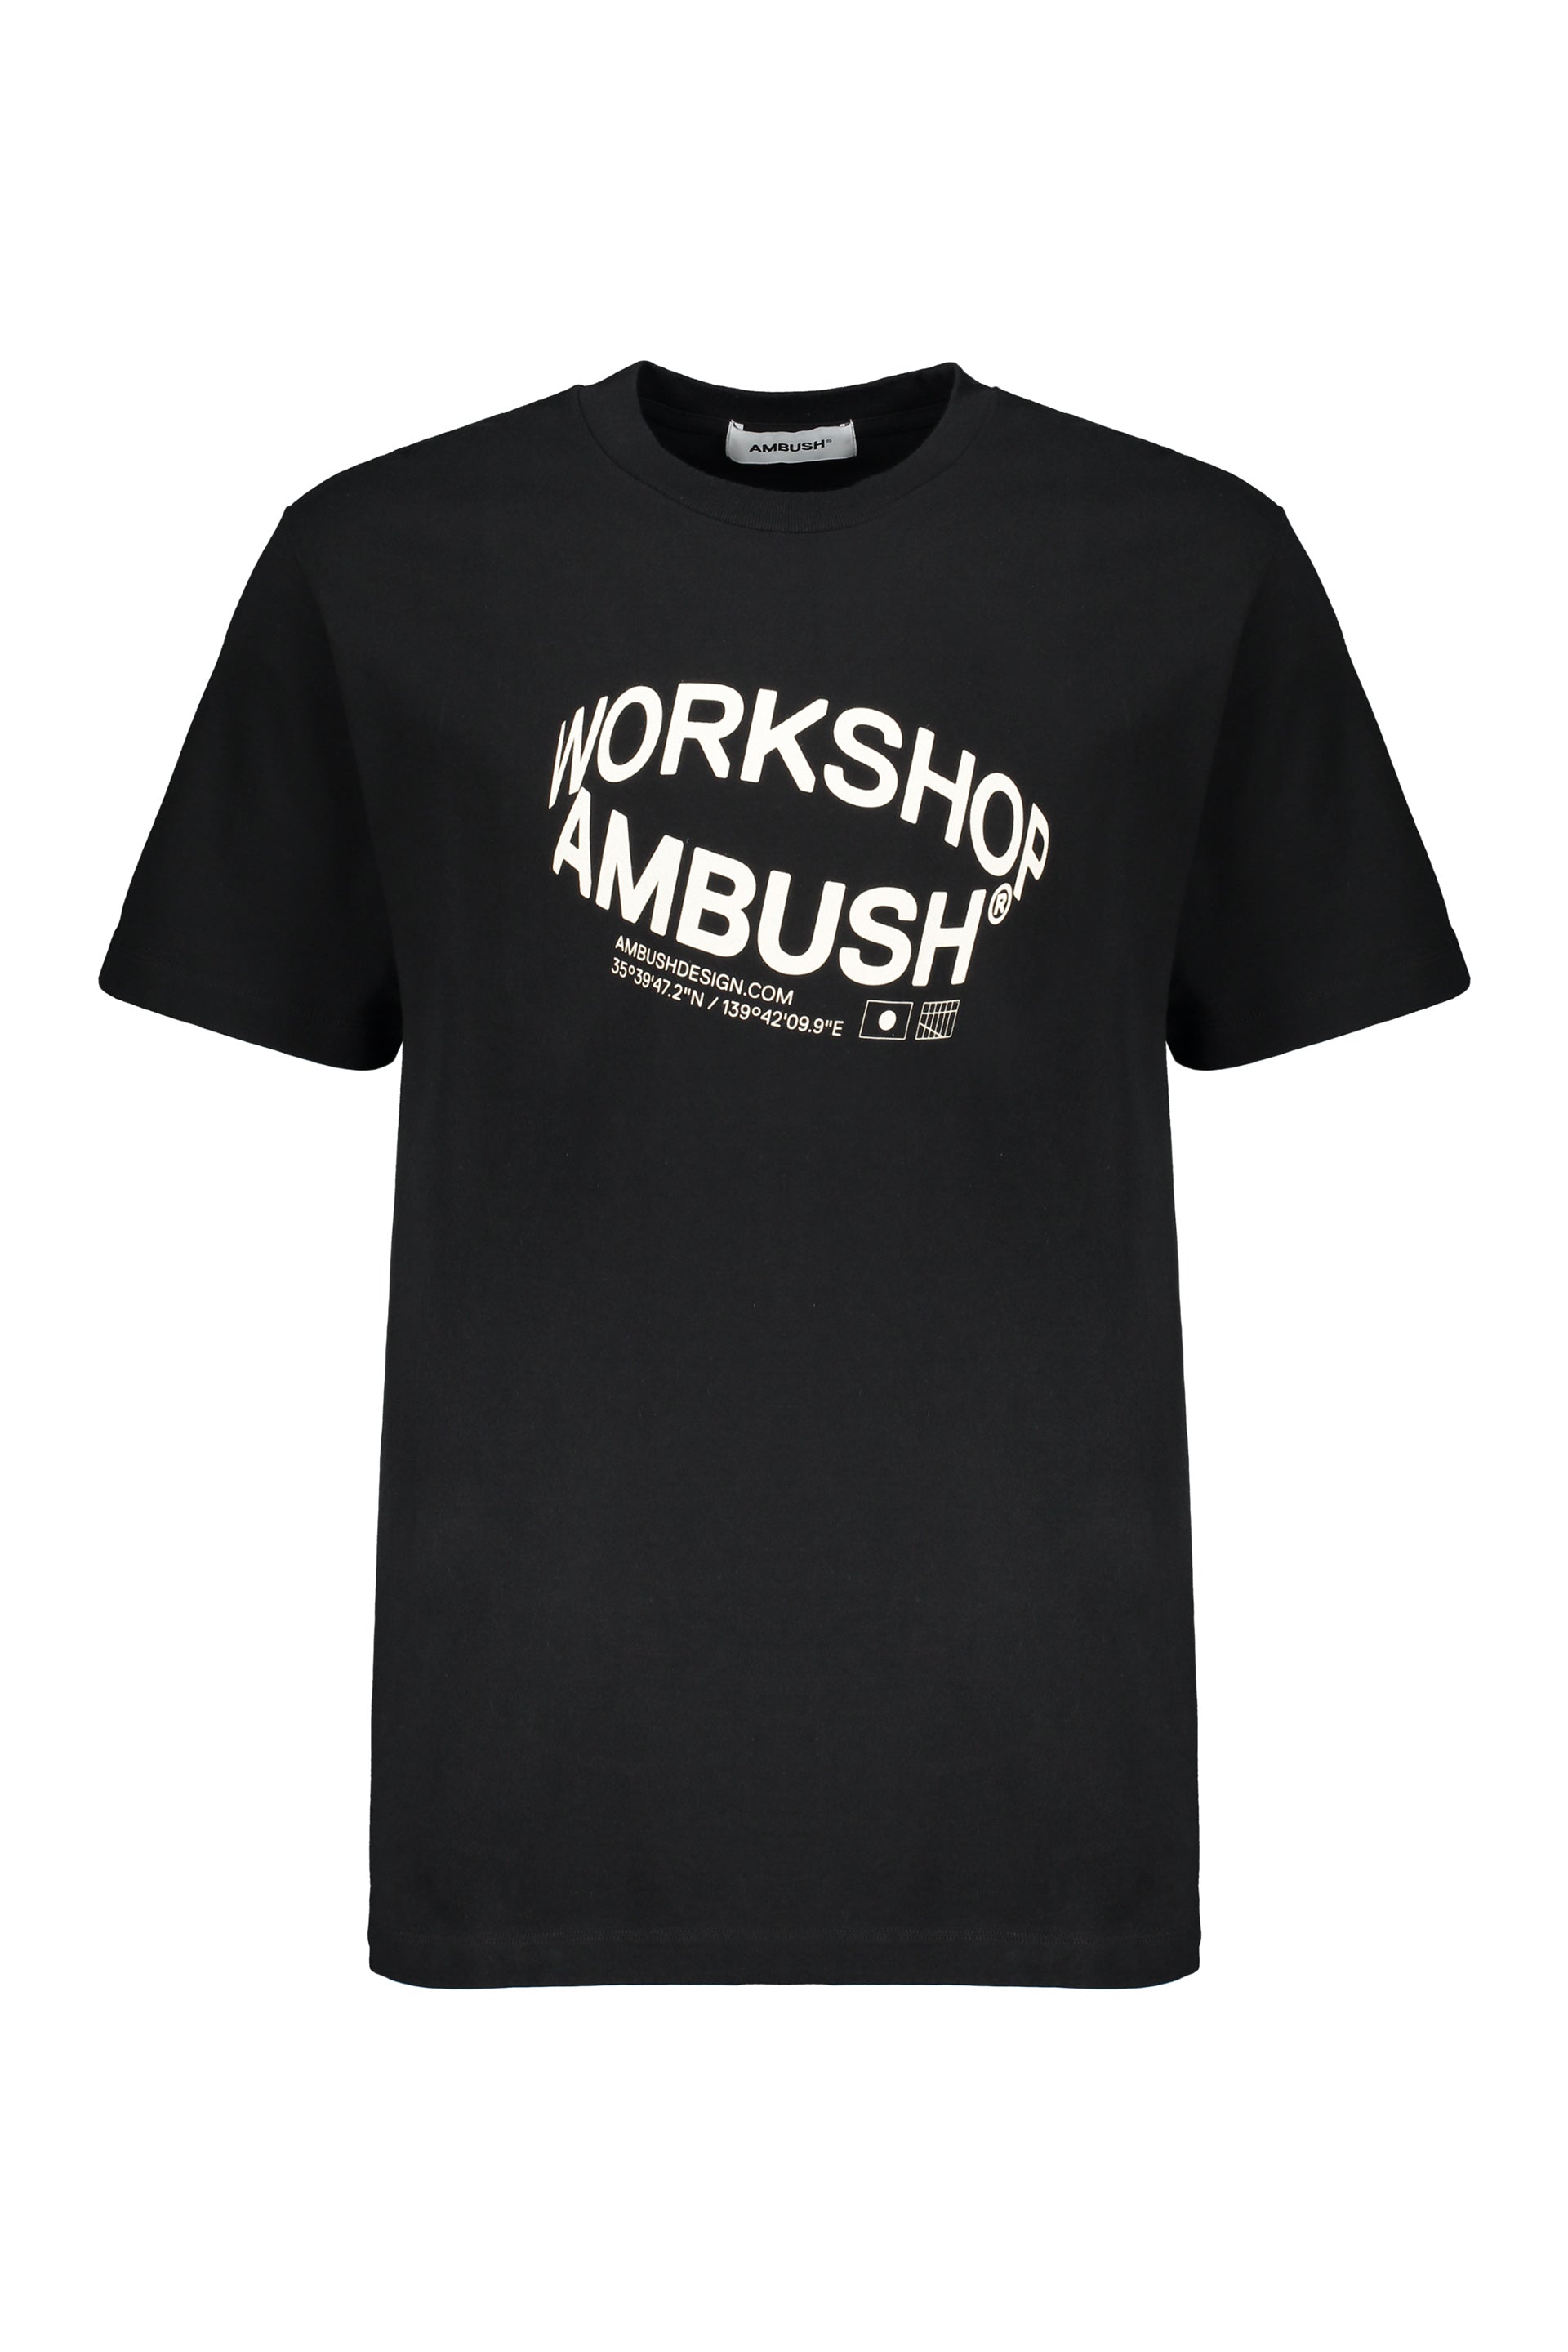 AMBUSH-OUTLET-SALE-Cotton-T-shirt-Shirts-L-ARCHIVE-COLLECTION_85c761e6-4b69-4e6f-8be2-94659aeaab63.jpg